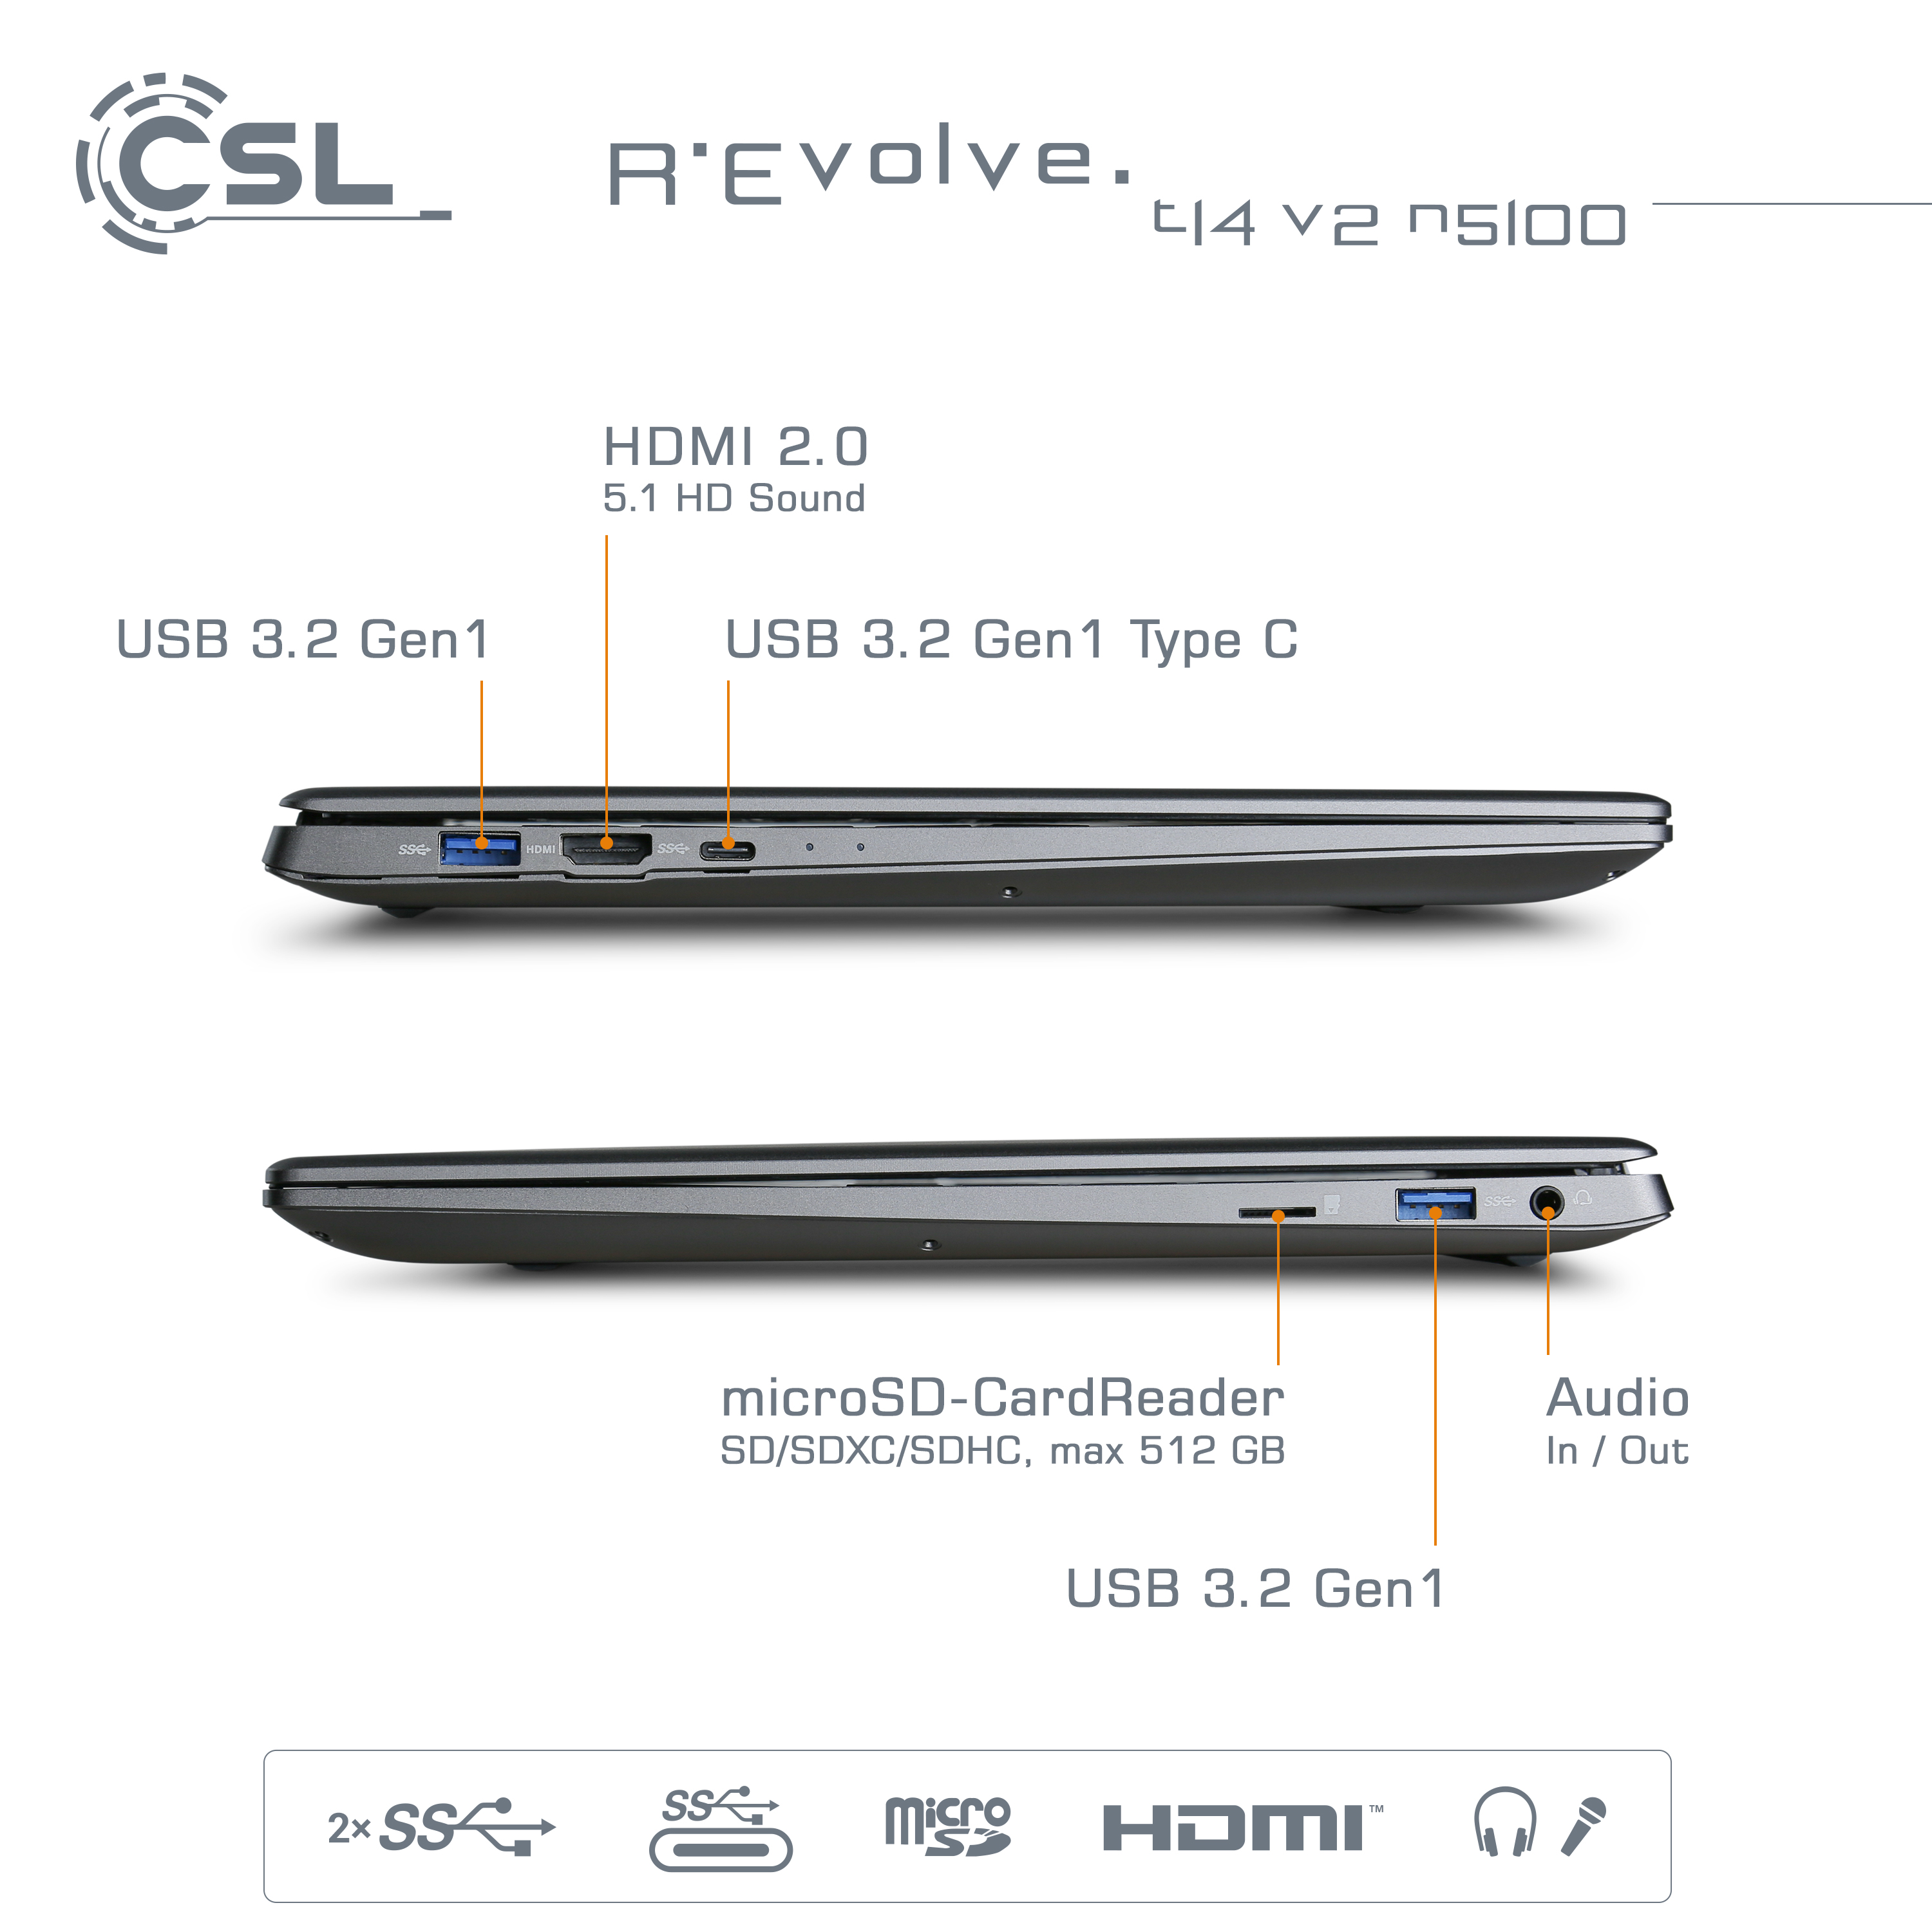 CSL R\'Evolve 4 11 / 250 Home, grau v2 / SSD, 14 Graphics, 4GB Touchscreen, Windows / Notebook Intel® Zoll RAM, UHD GB T14 250GB mit GB Display